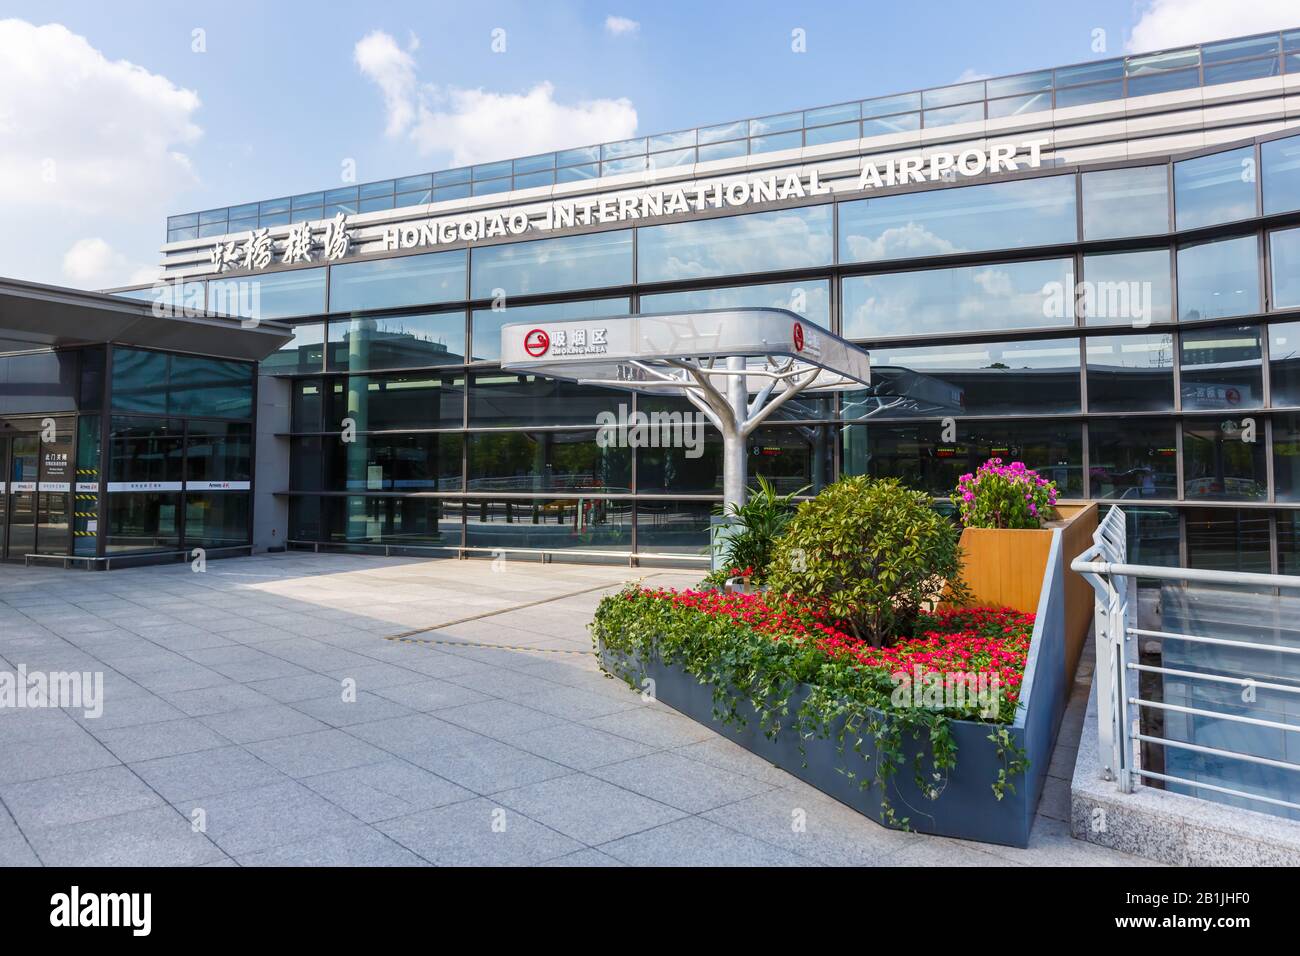 Shanghai Hongqiao Airport: Terminals of SHA, Service, Airlines